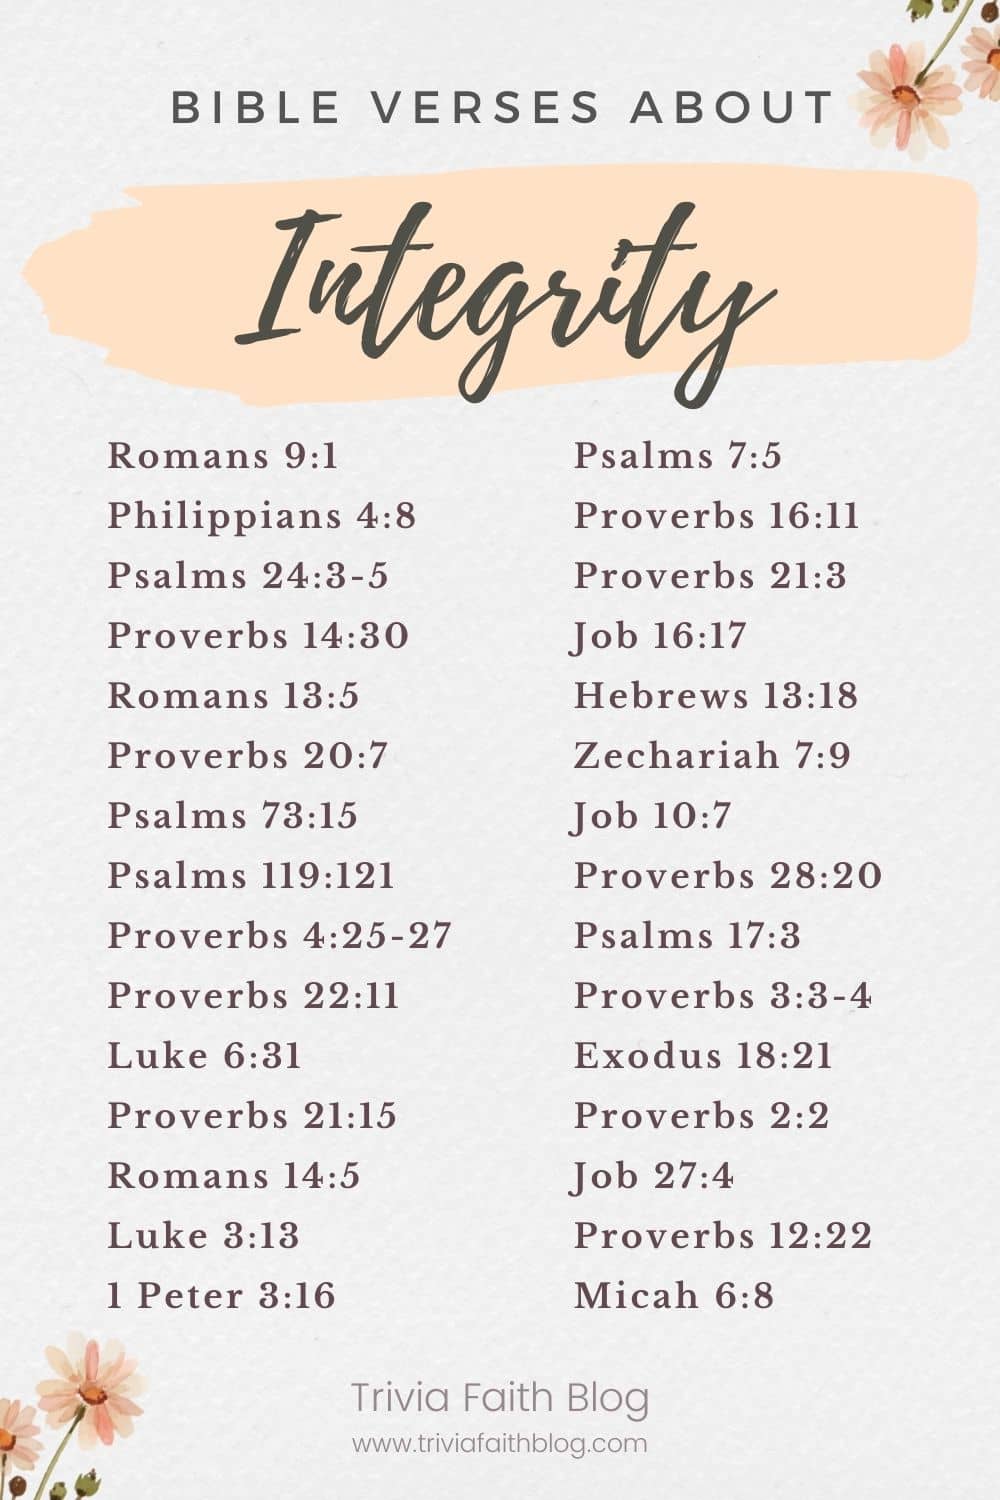 Bible verses about integrity kjv